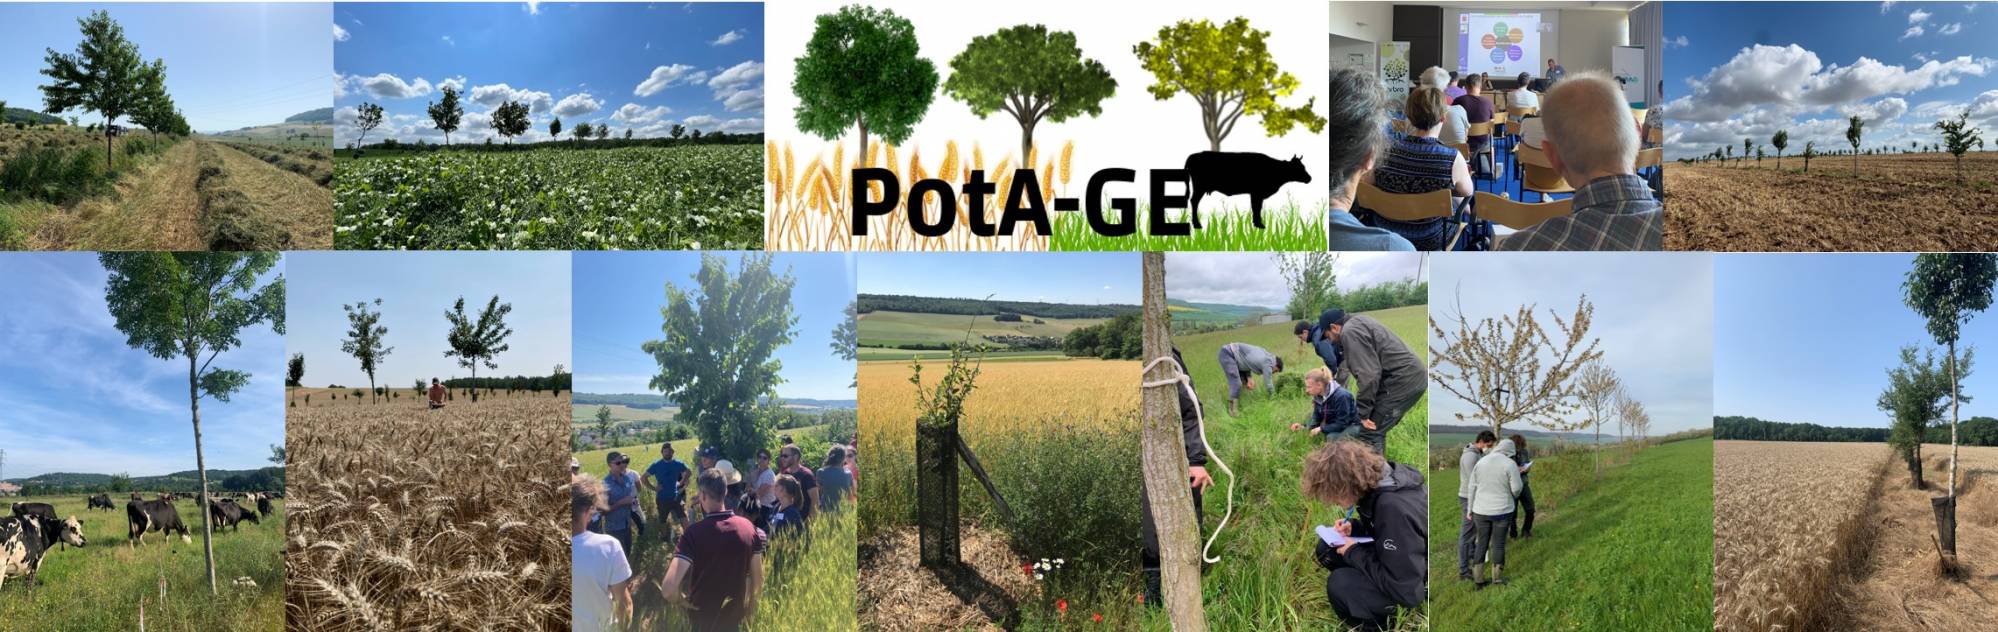 Bandeau projet PotA-GE